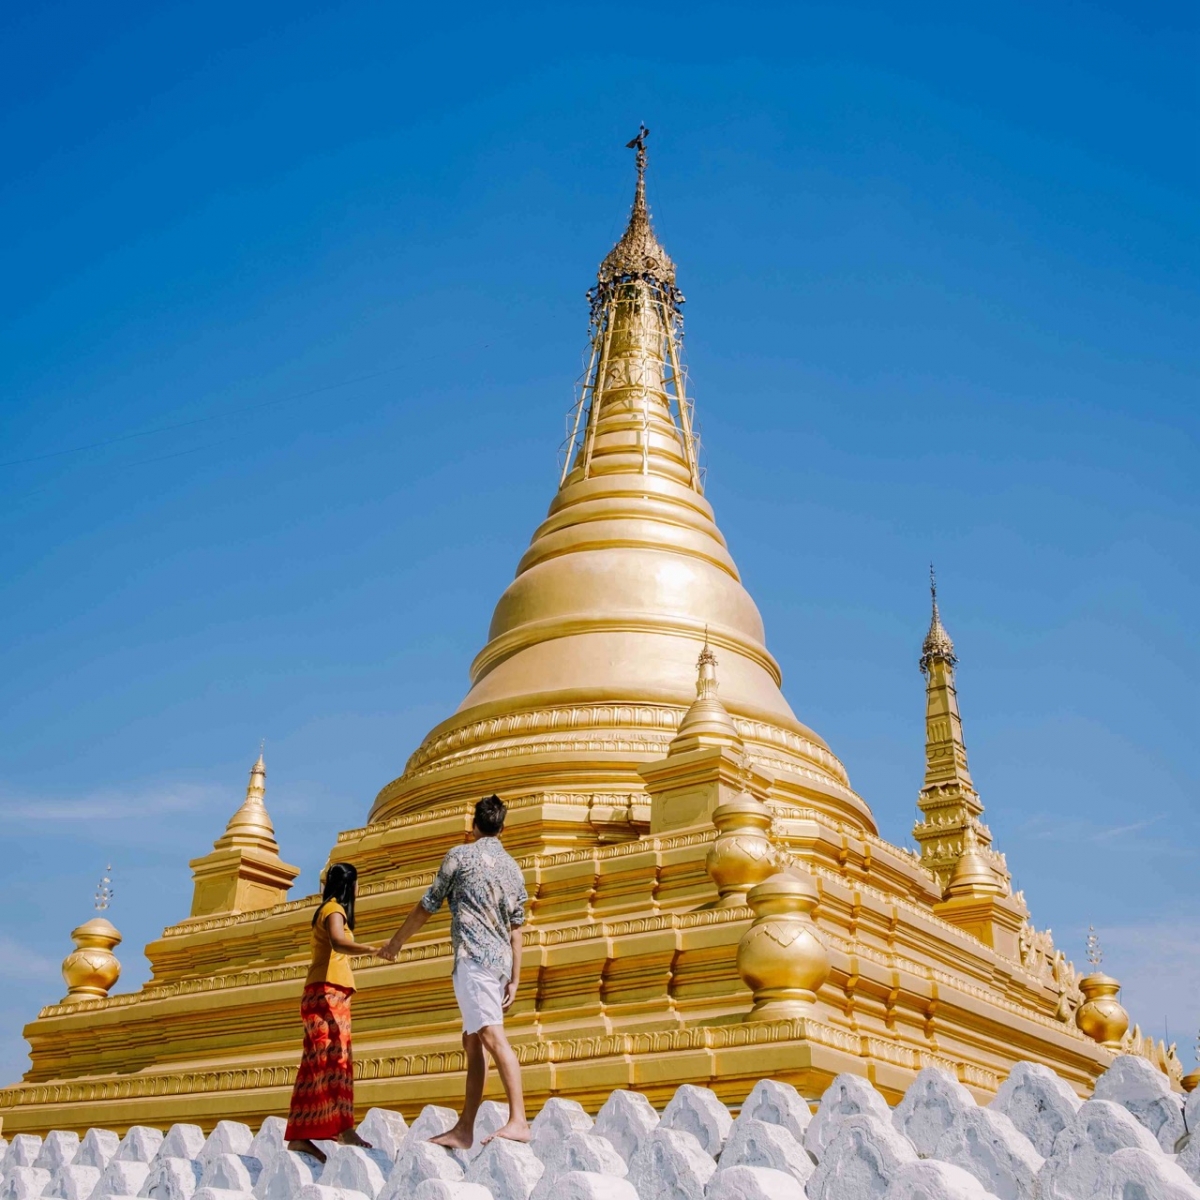 Tempio di Kuthodaw nella città di Mandalay in Myanmar Birmania